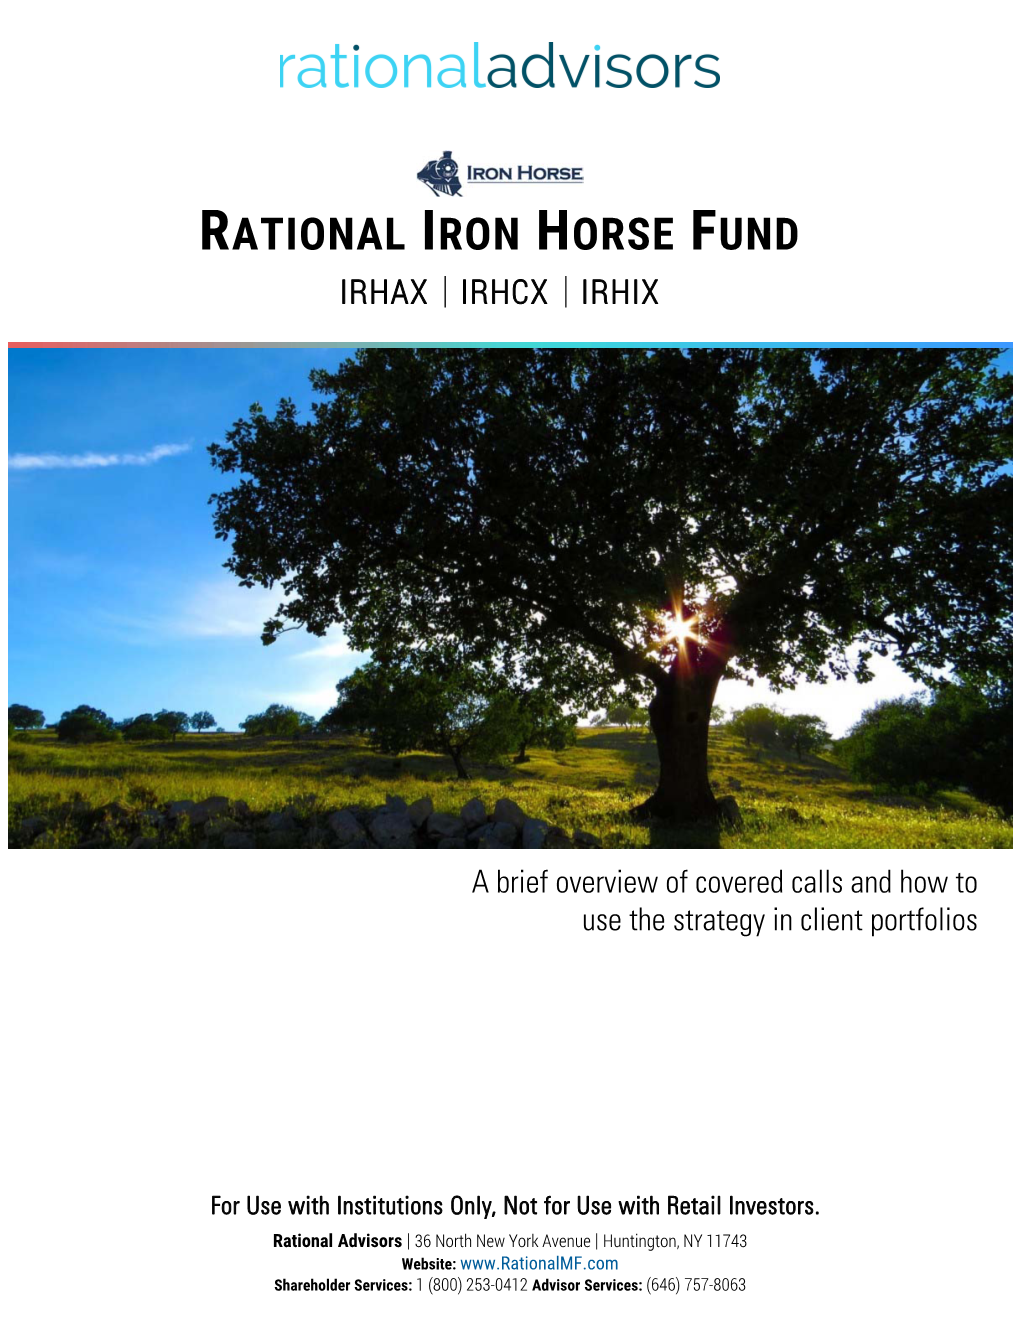 Rational Iron Horse Fund Irhax Irhcx Irhix